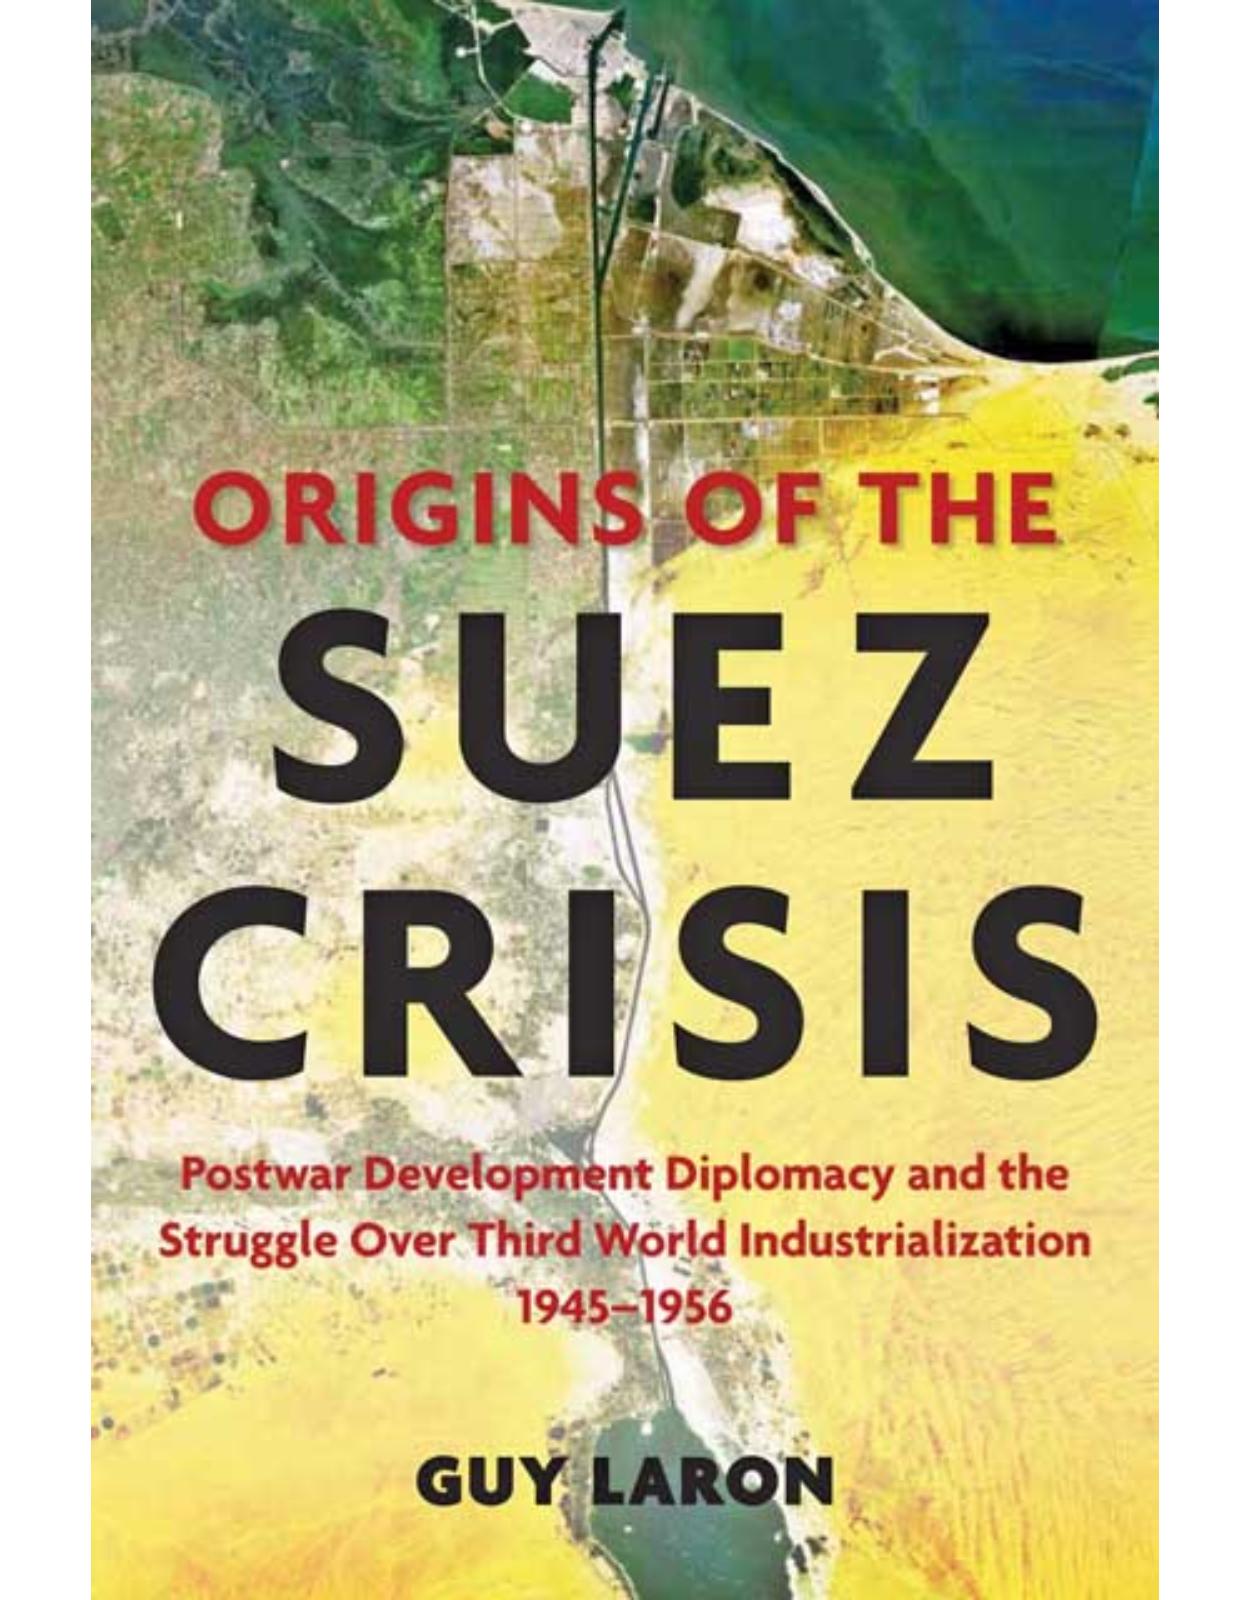 Origins of the Suez Crisis. Postwar Development Diplomacy and the Struggle over Third World Industrialization, 1945-1956